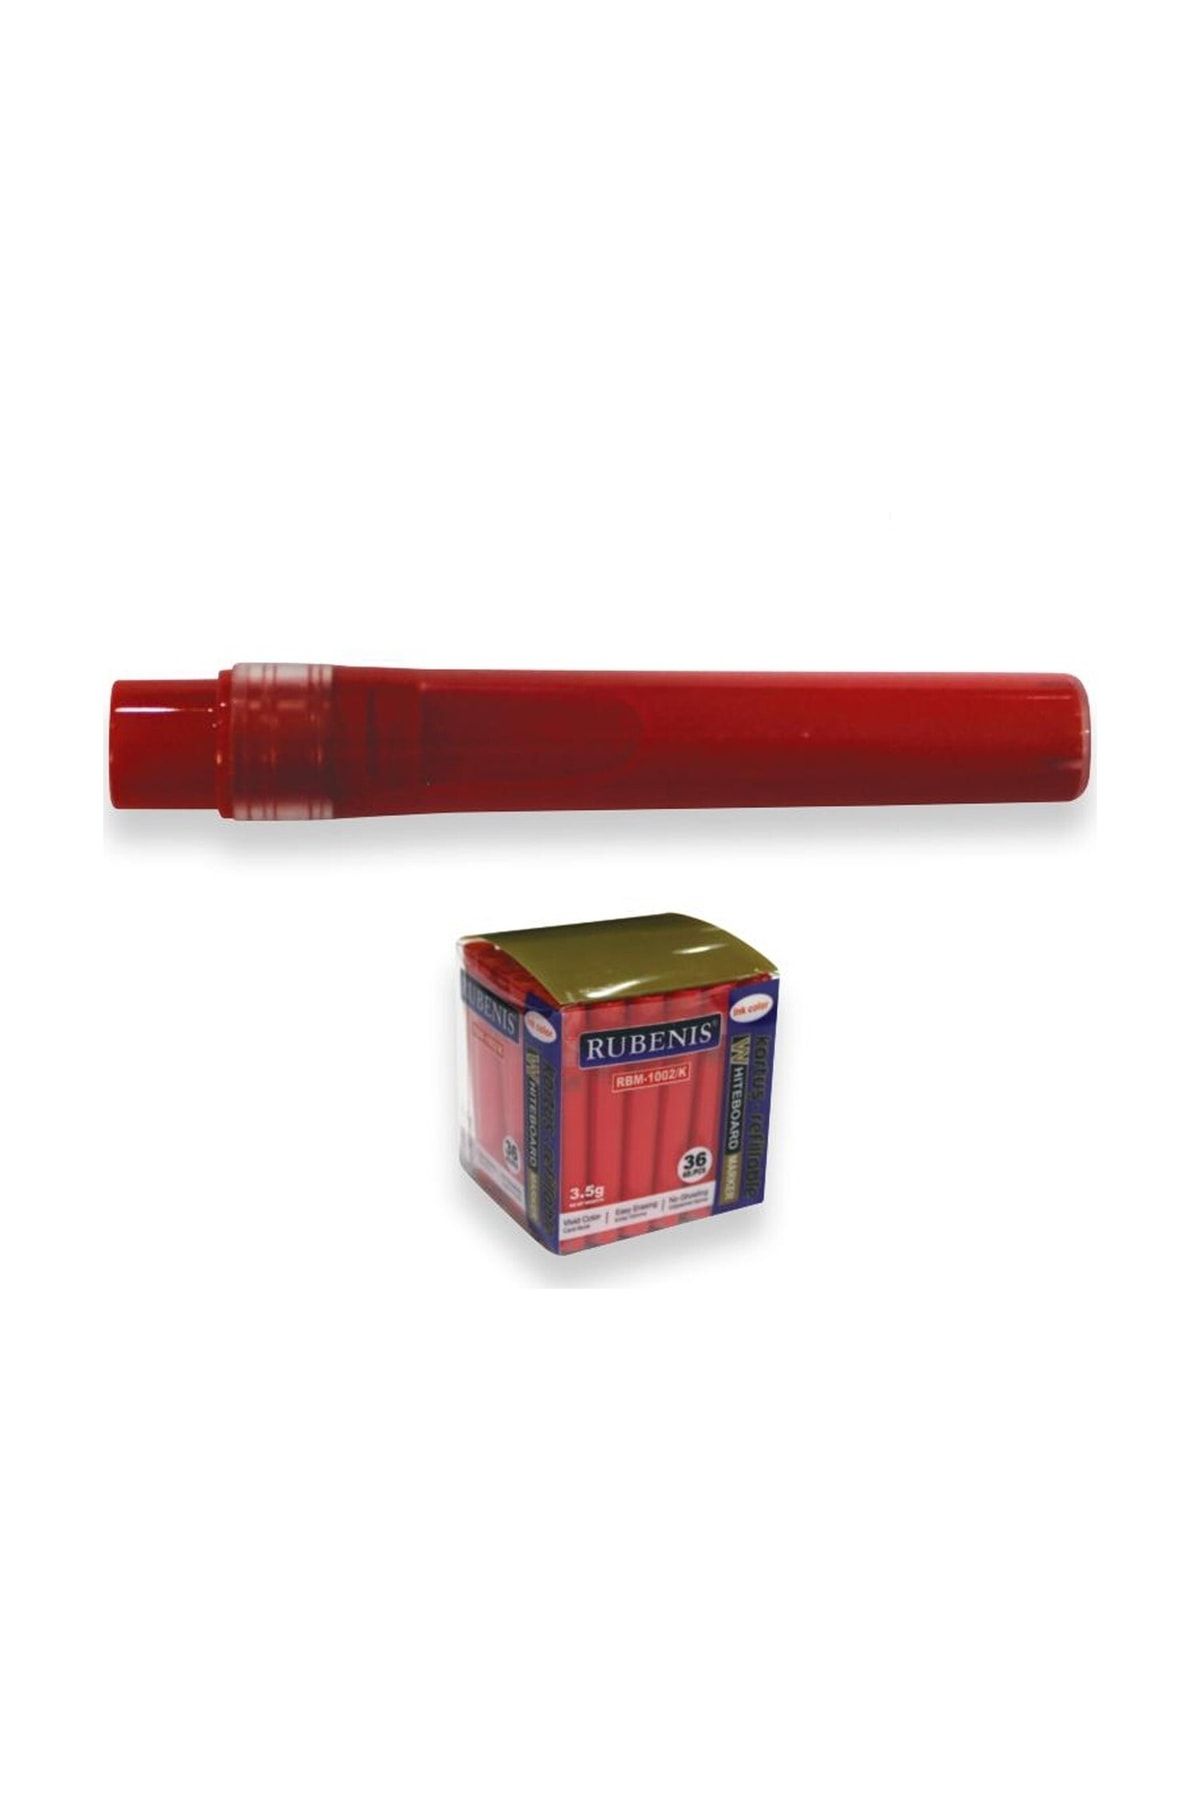 Rubenis Tahta Kalemi Kartuşu Kırmızı Rbm-1002 (36 Lı Paket)